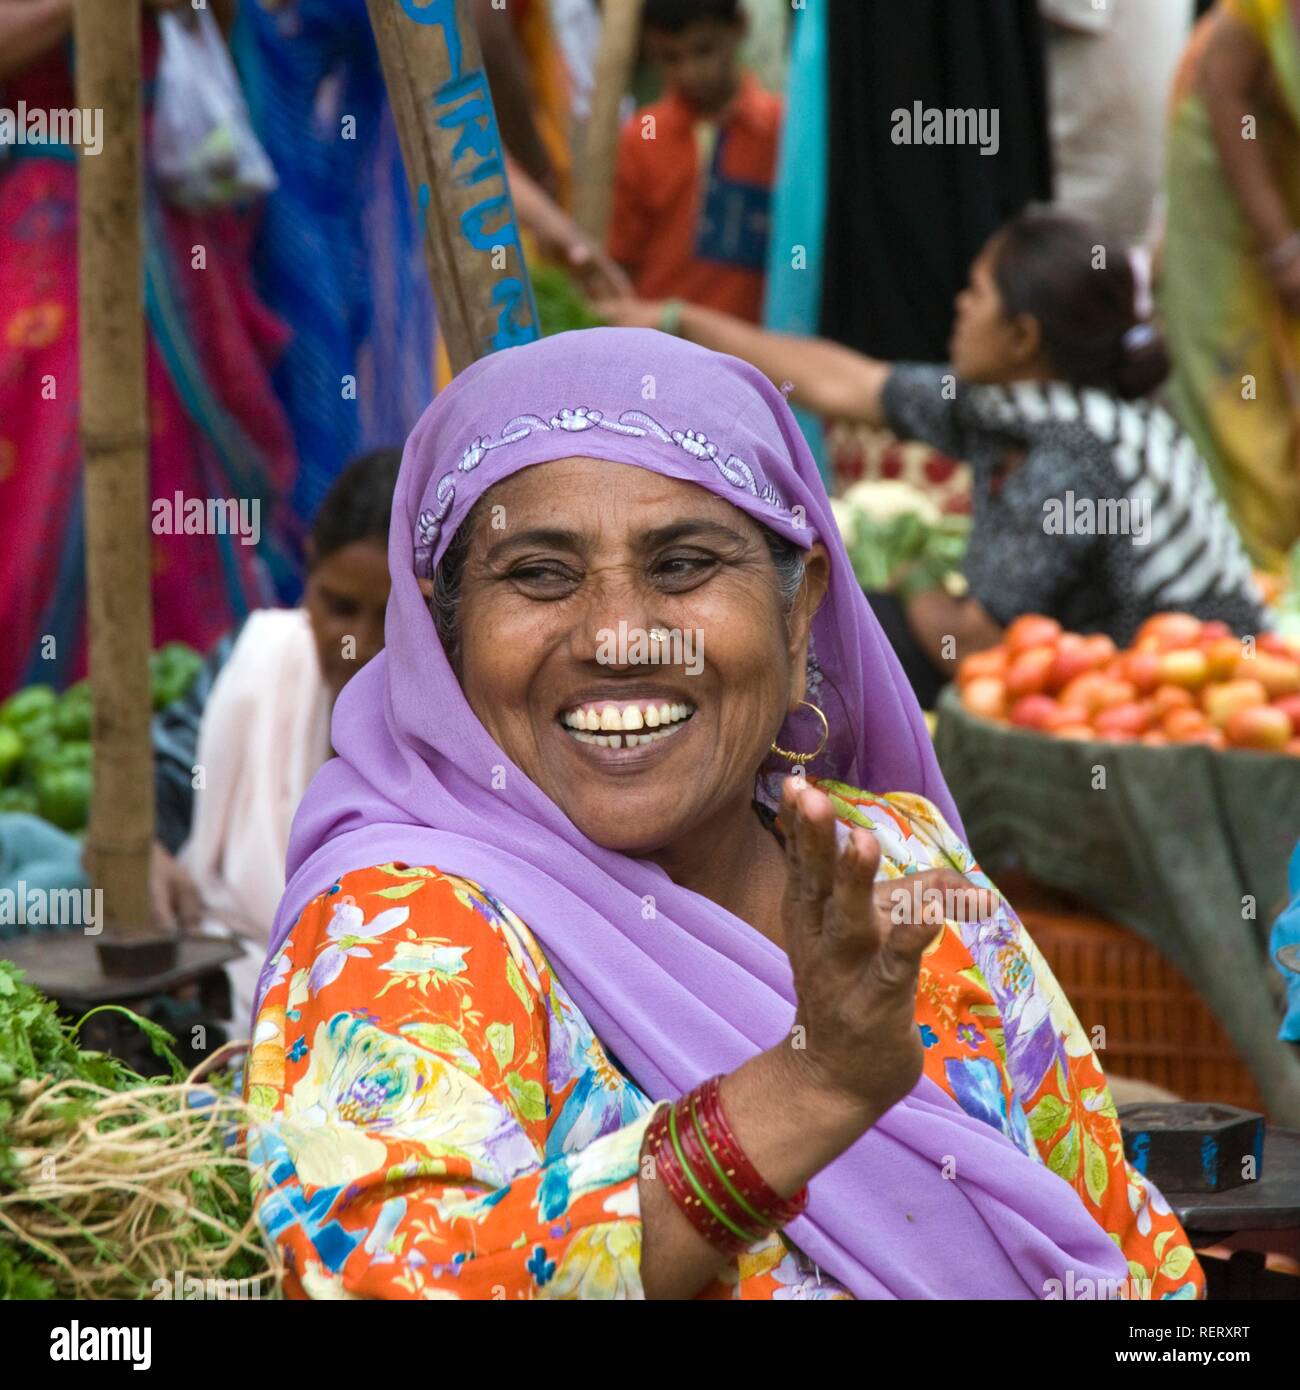 Indian woman, portrait, Udaipur market, Rajasthan, India Stock Photo